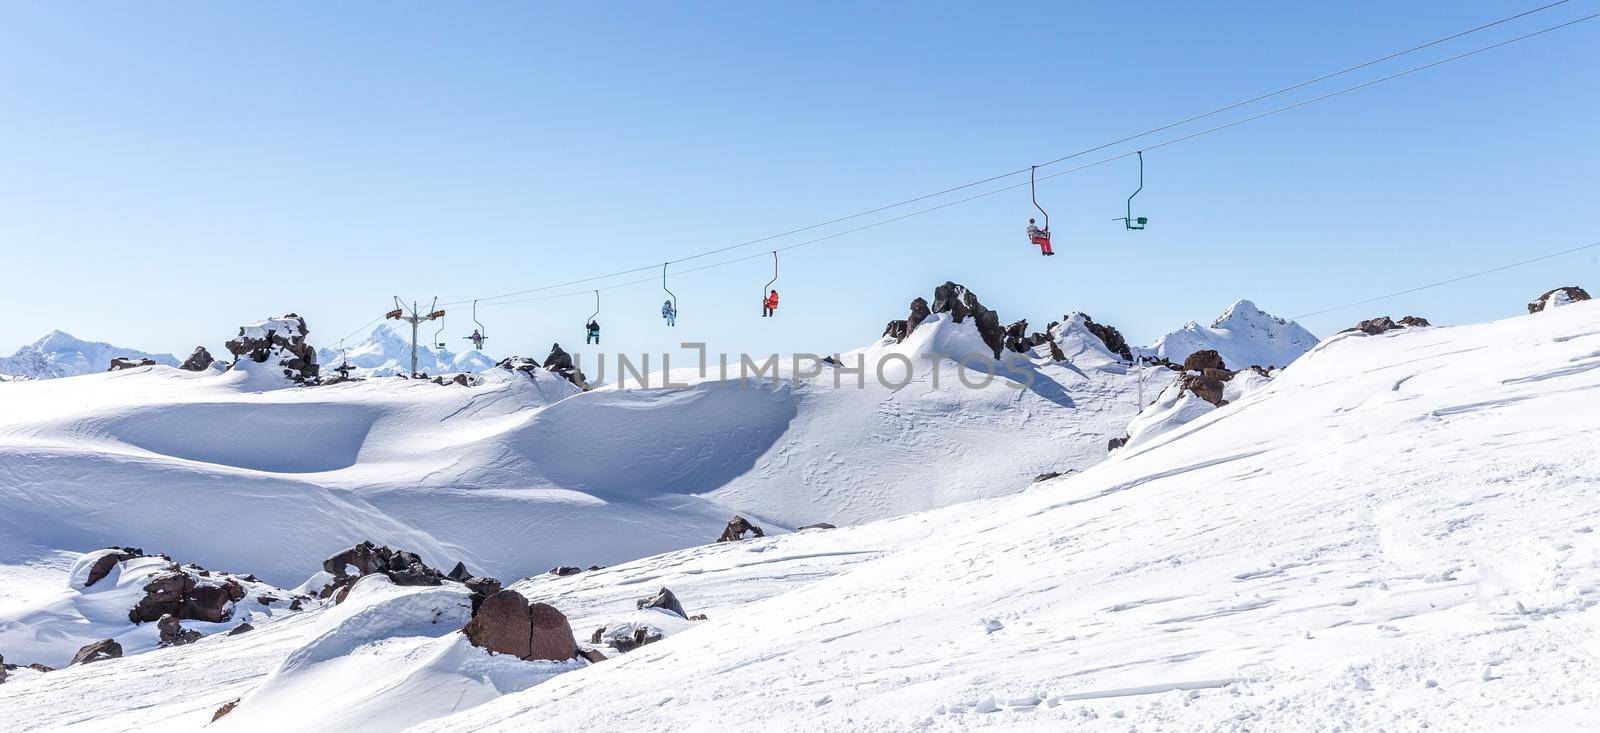 Ski lift in Ski Resort high in the mountains in Russia